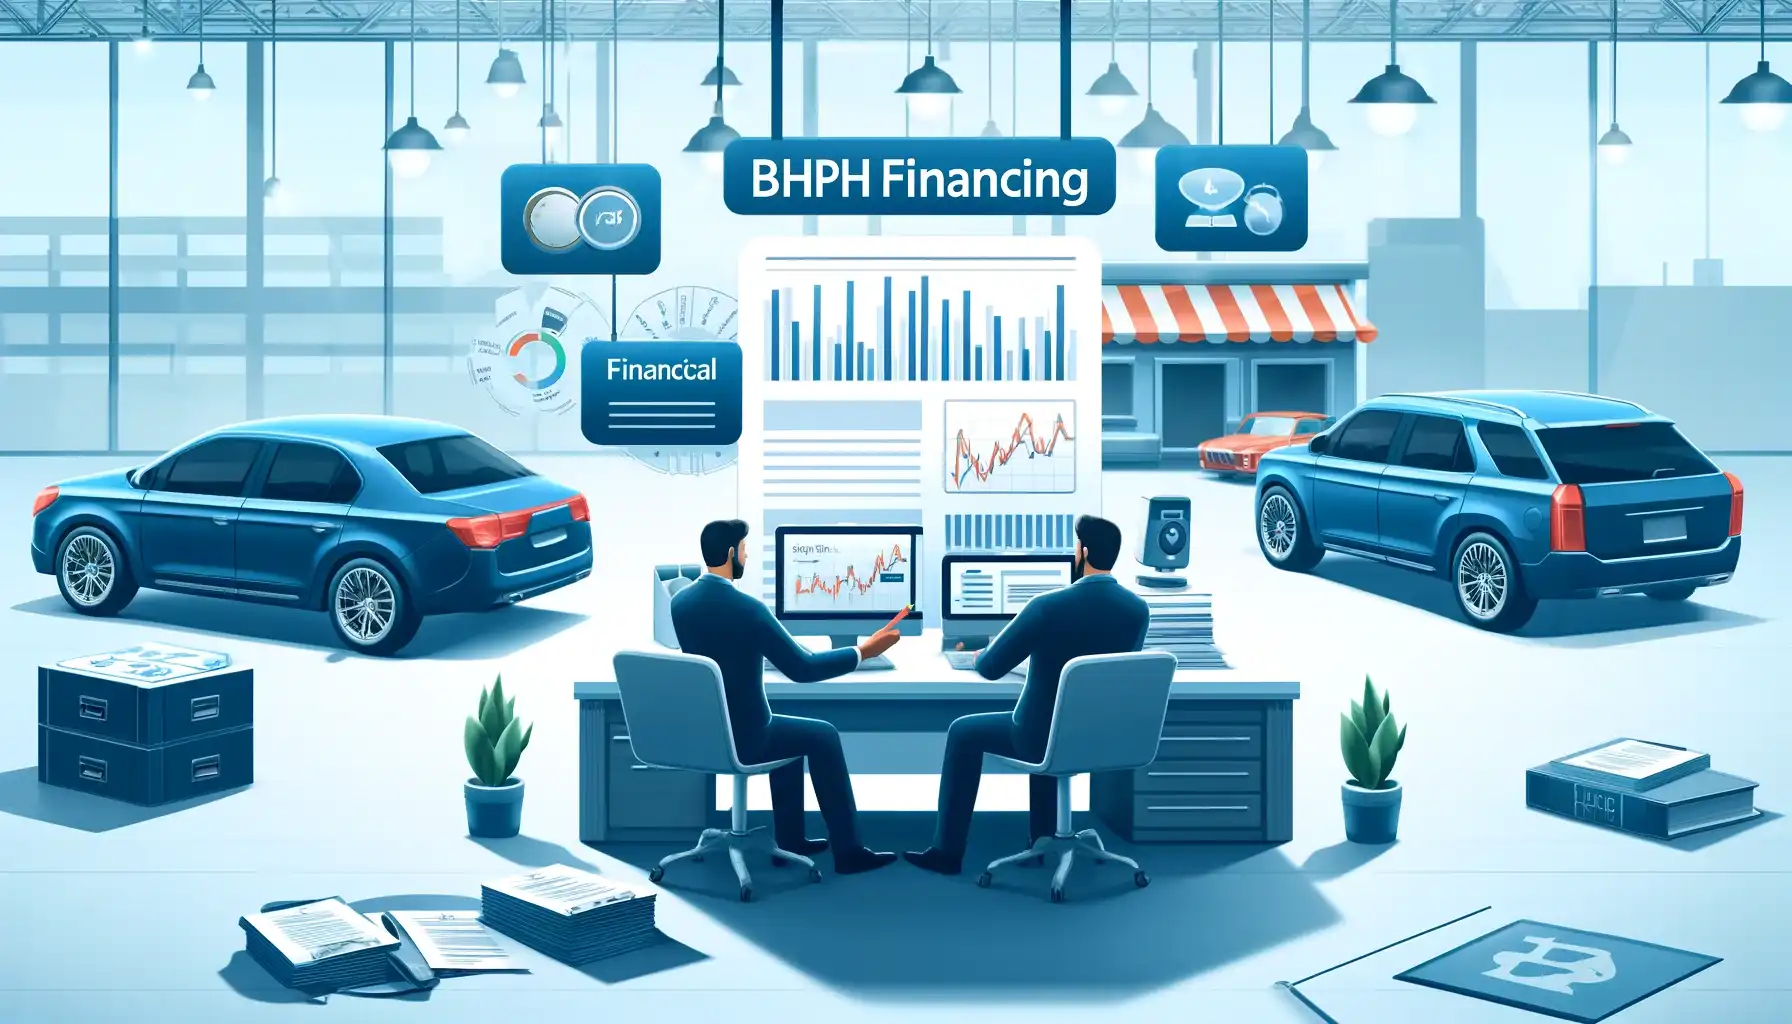 Buy Here Pay Here (BHPH) Financing Image